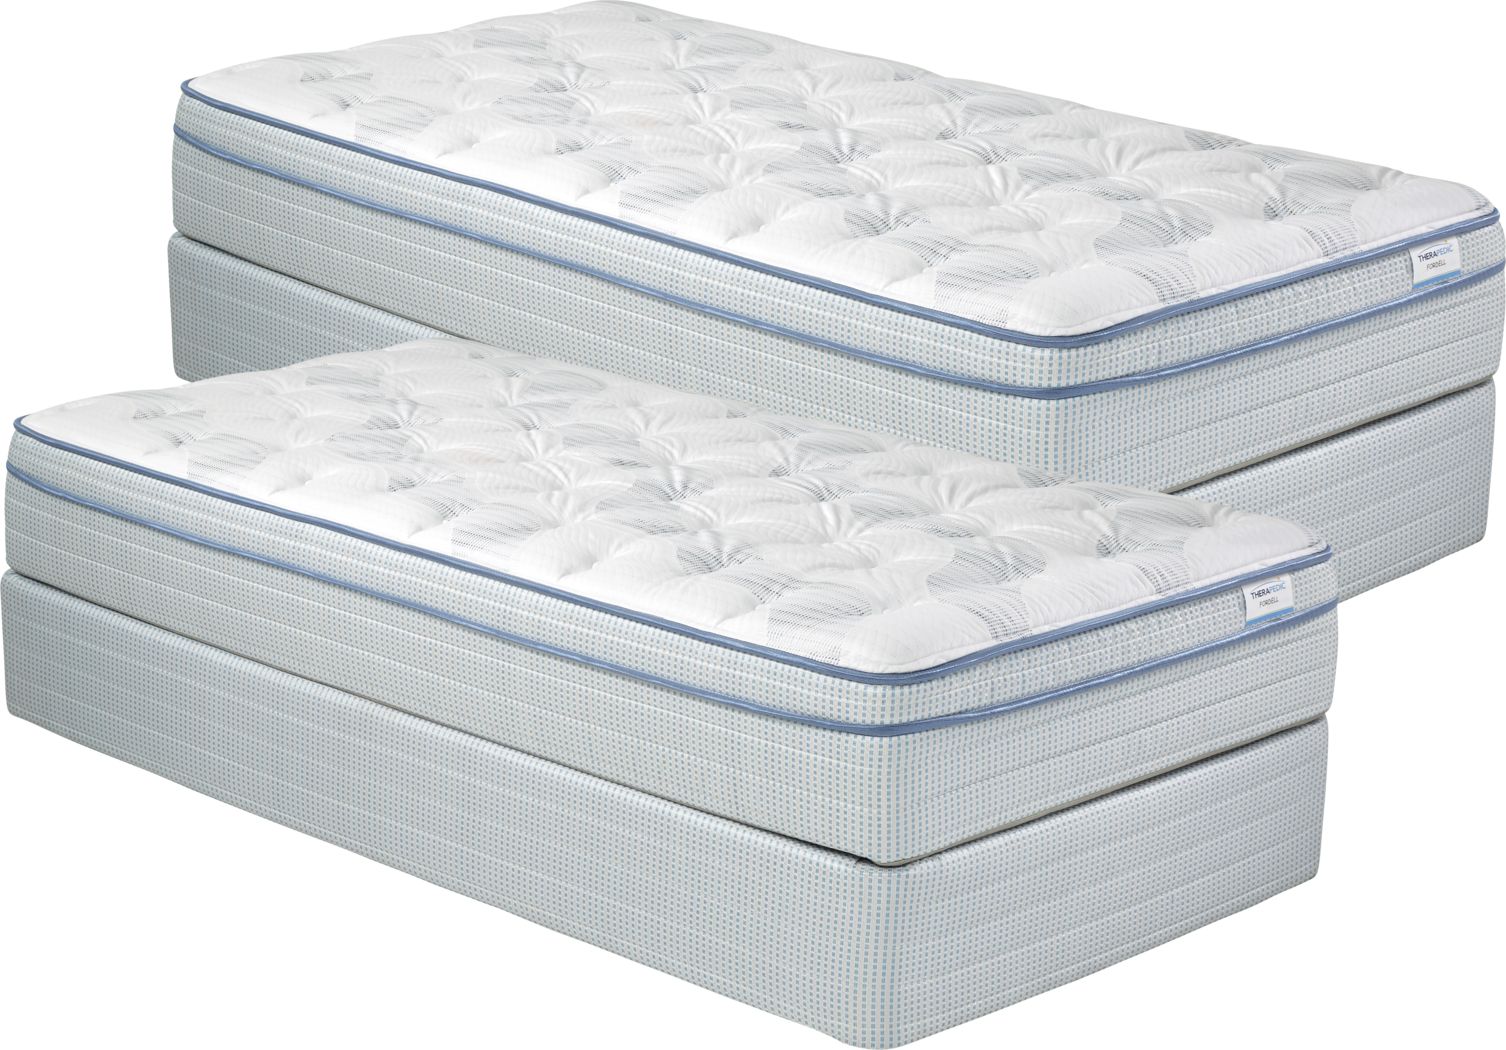 99 twin mattress set